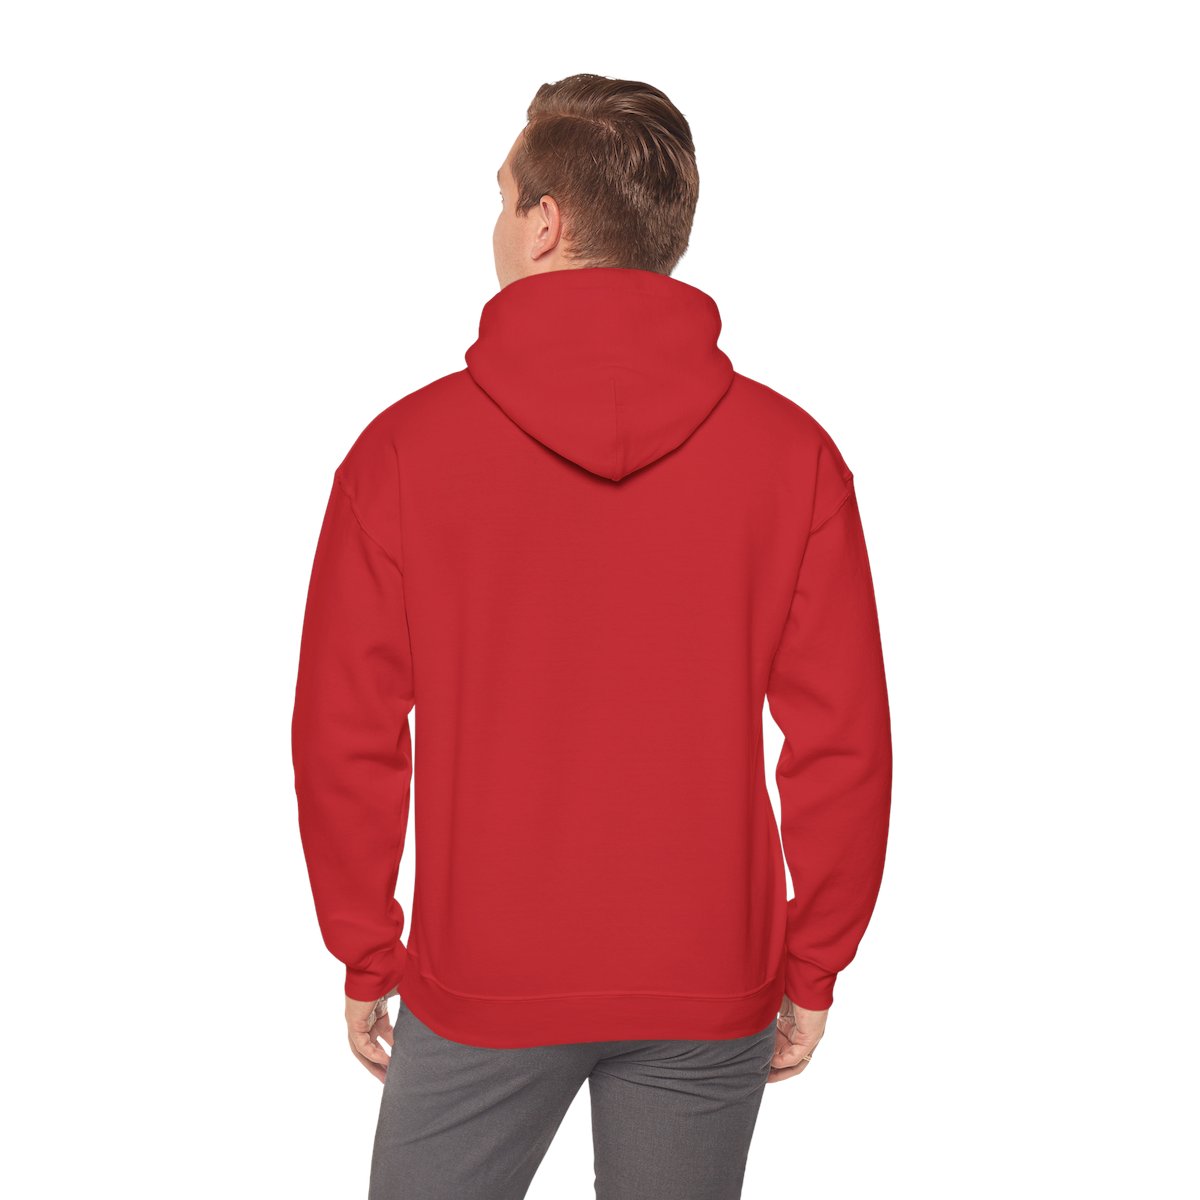 ONEderland Mountain Unisex Heavy Blend™ Hooded Sweatshirt product thumbnail image